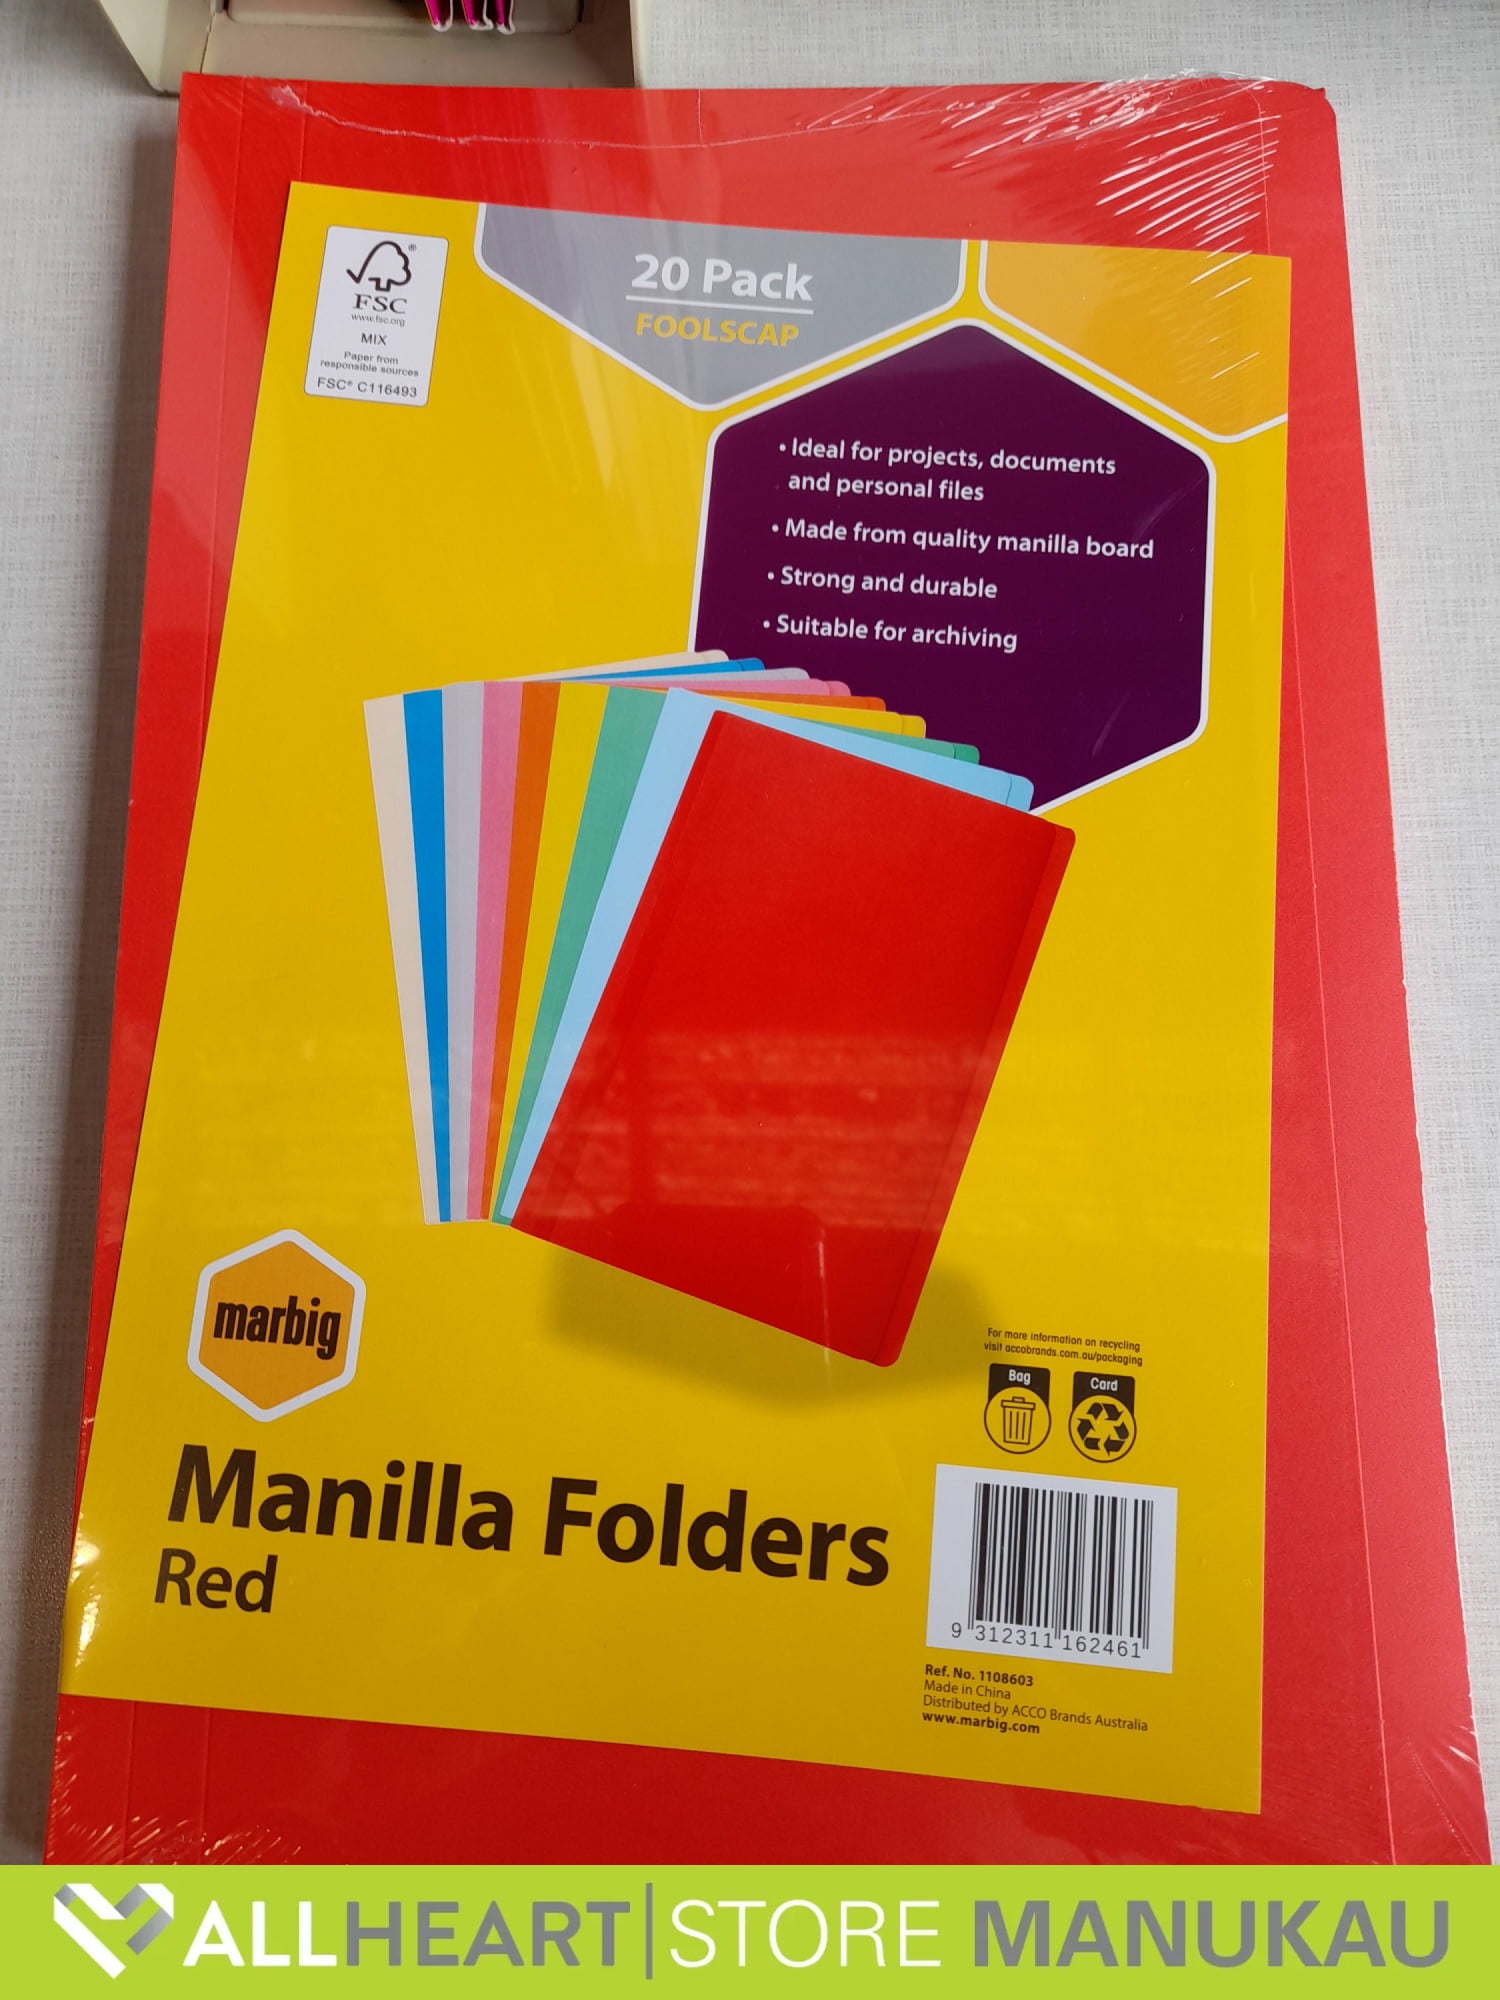 Manilla Folders - Red 20 Pack